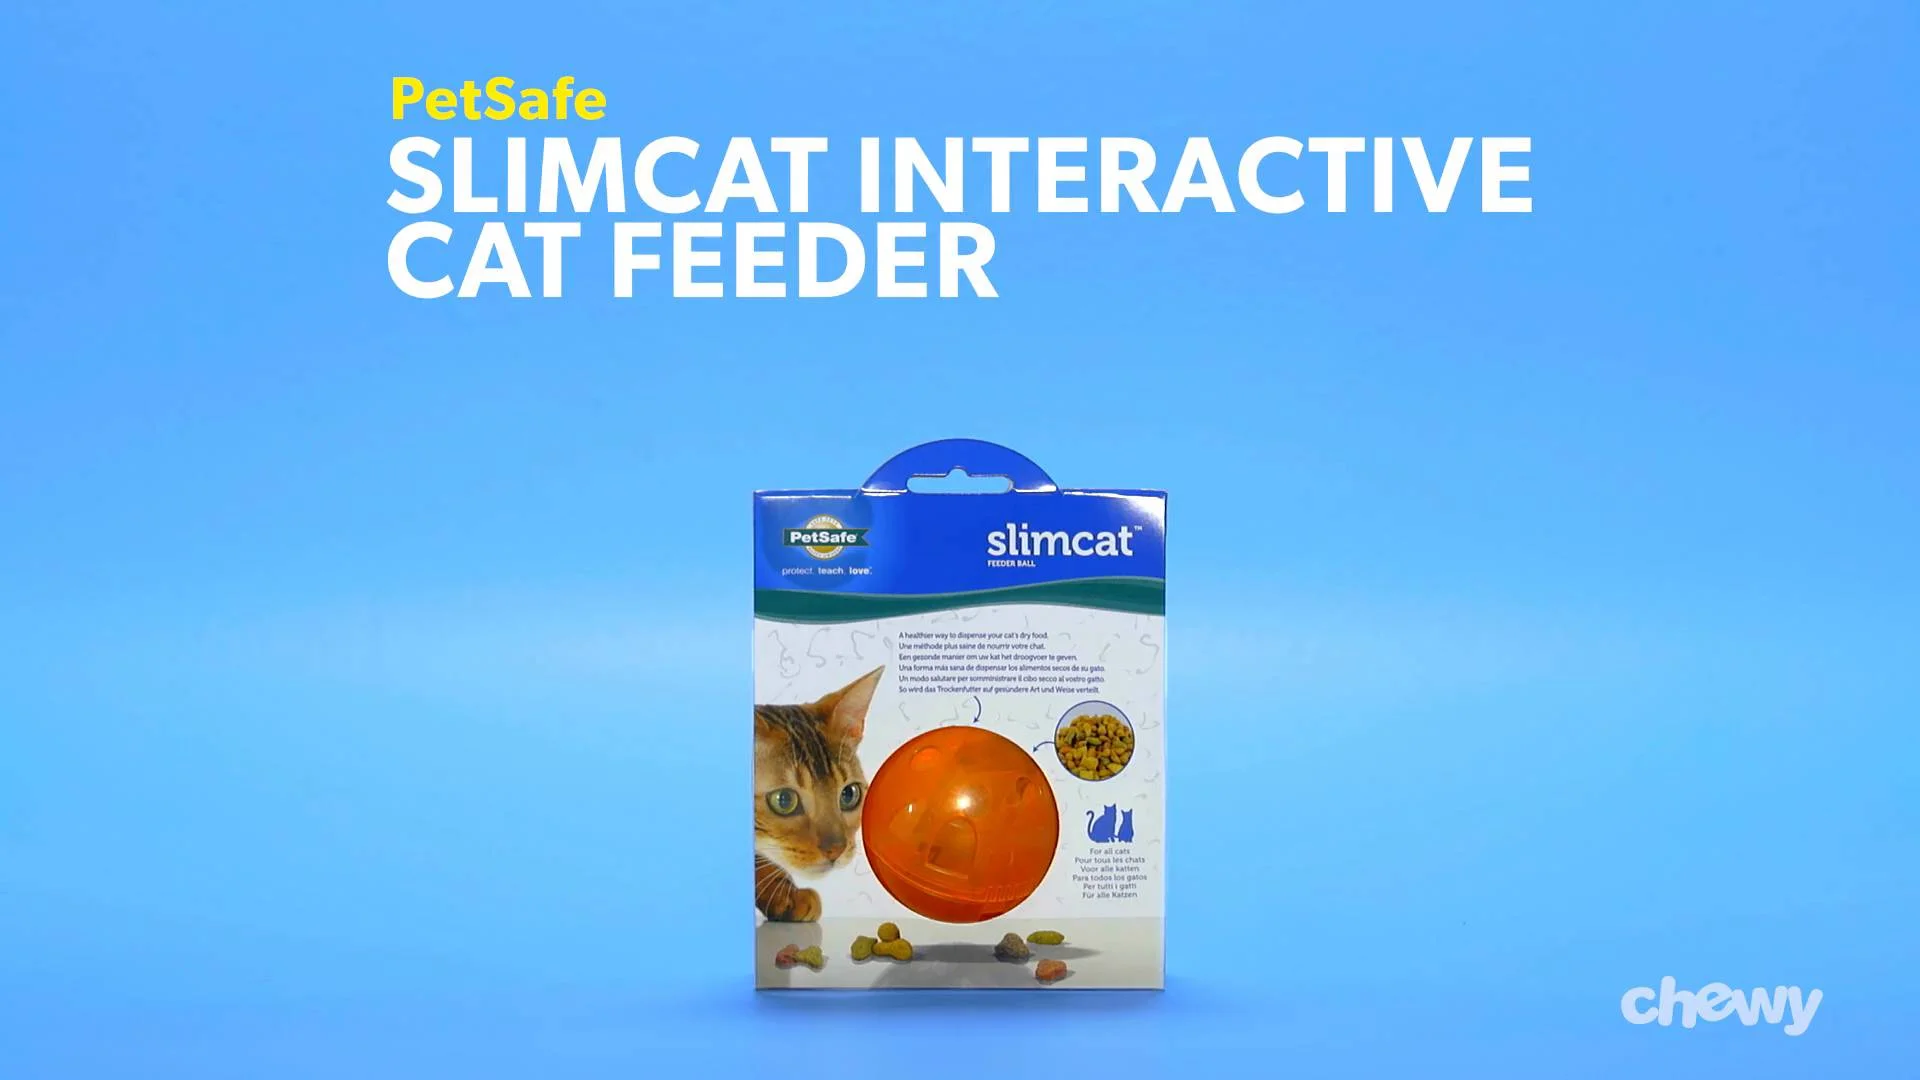 petsafe slimcat interactive cat feeder